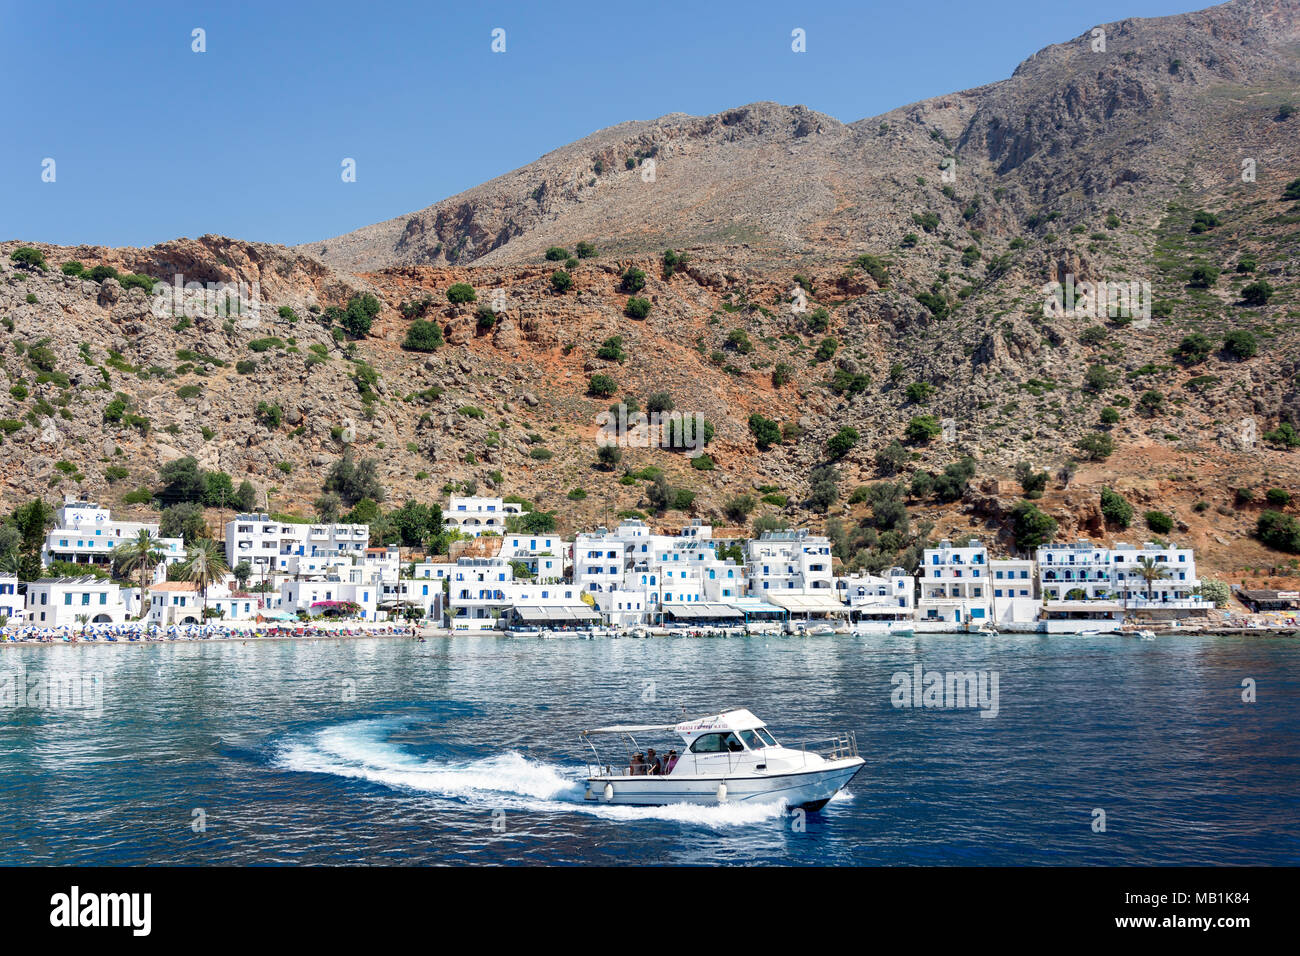 View of village and harbour from sea, Loutro, Sfakia, Chania Region, Crete (Kriti), Greece Stock Photo